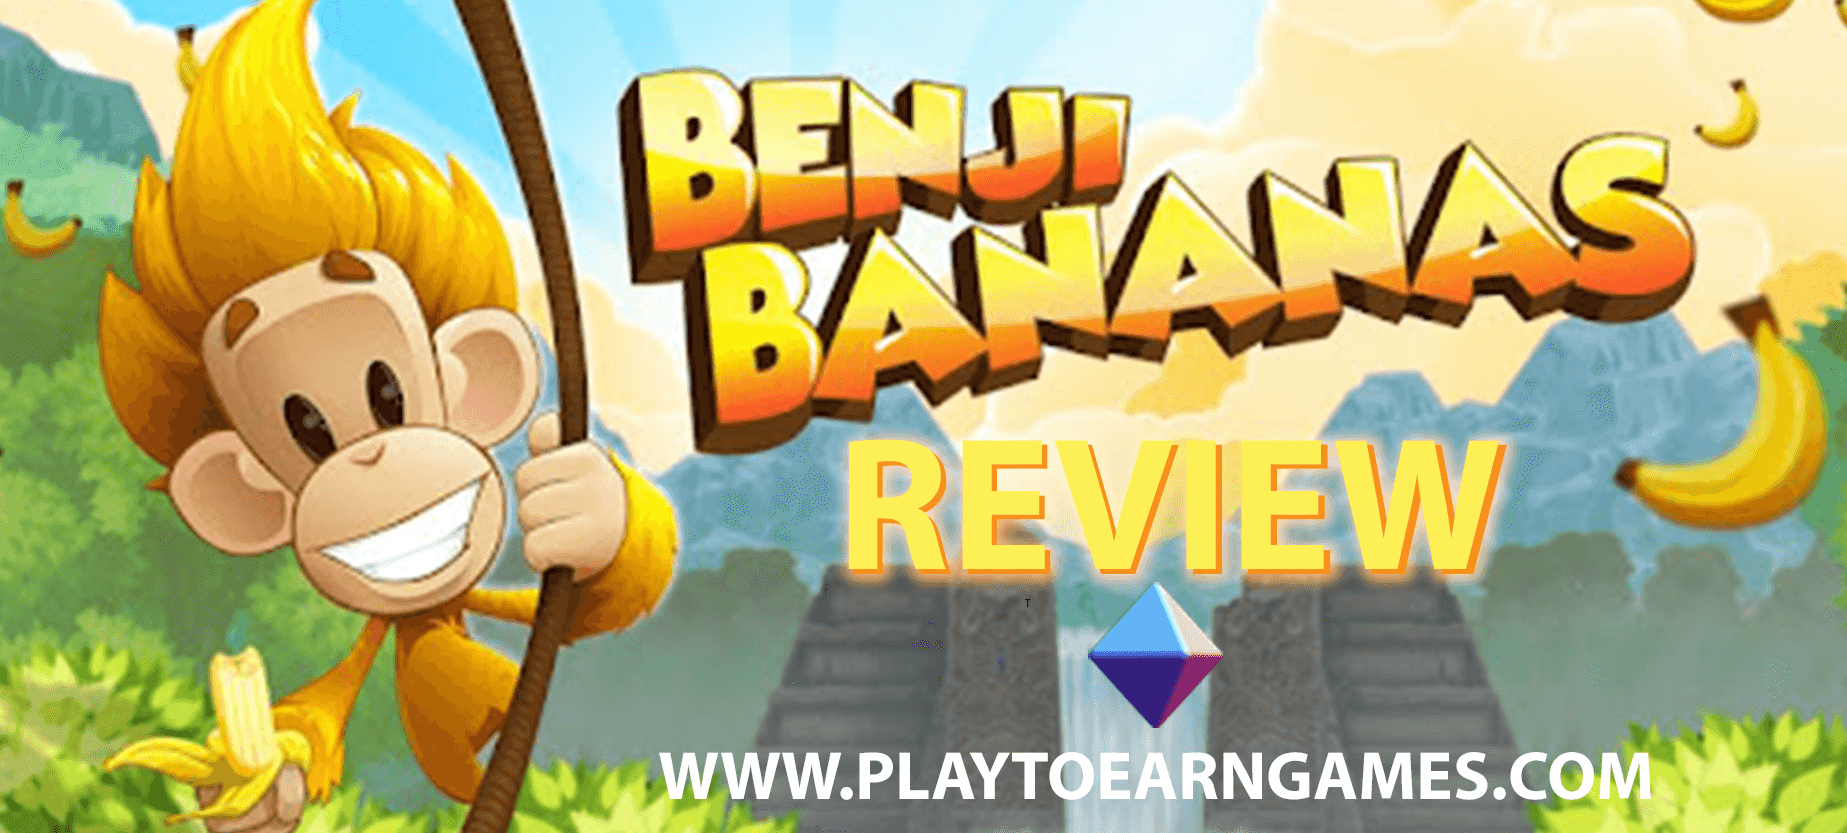 Benji Bananas - Video Game Review